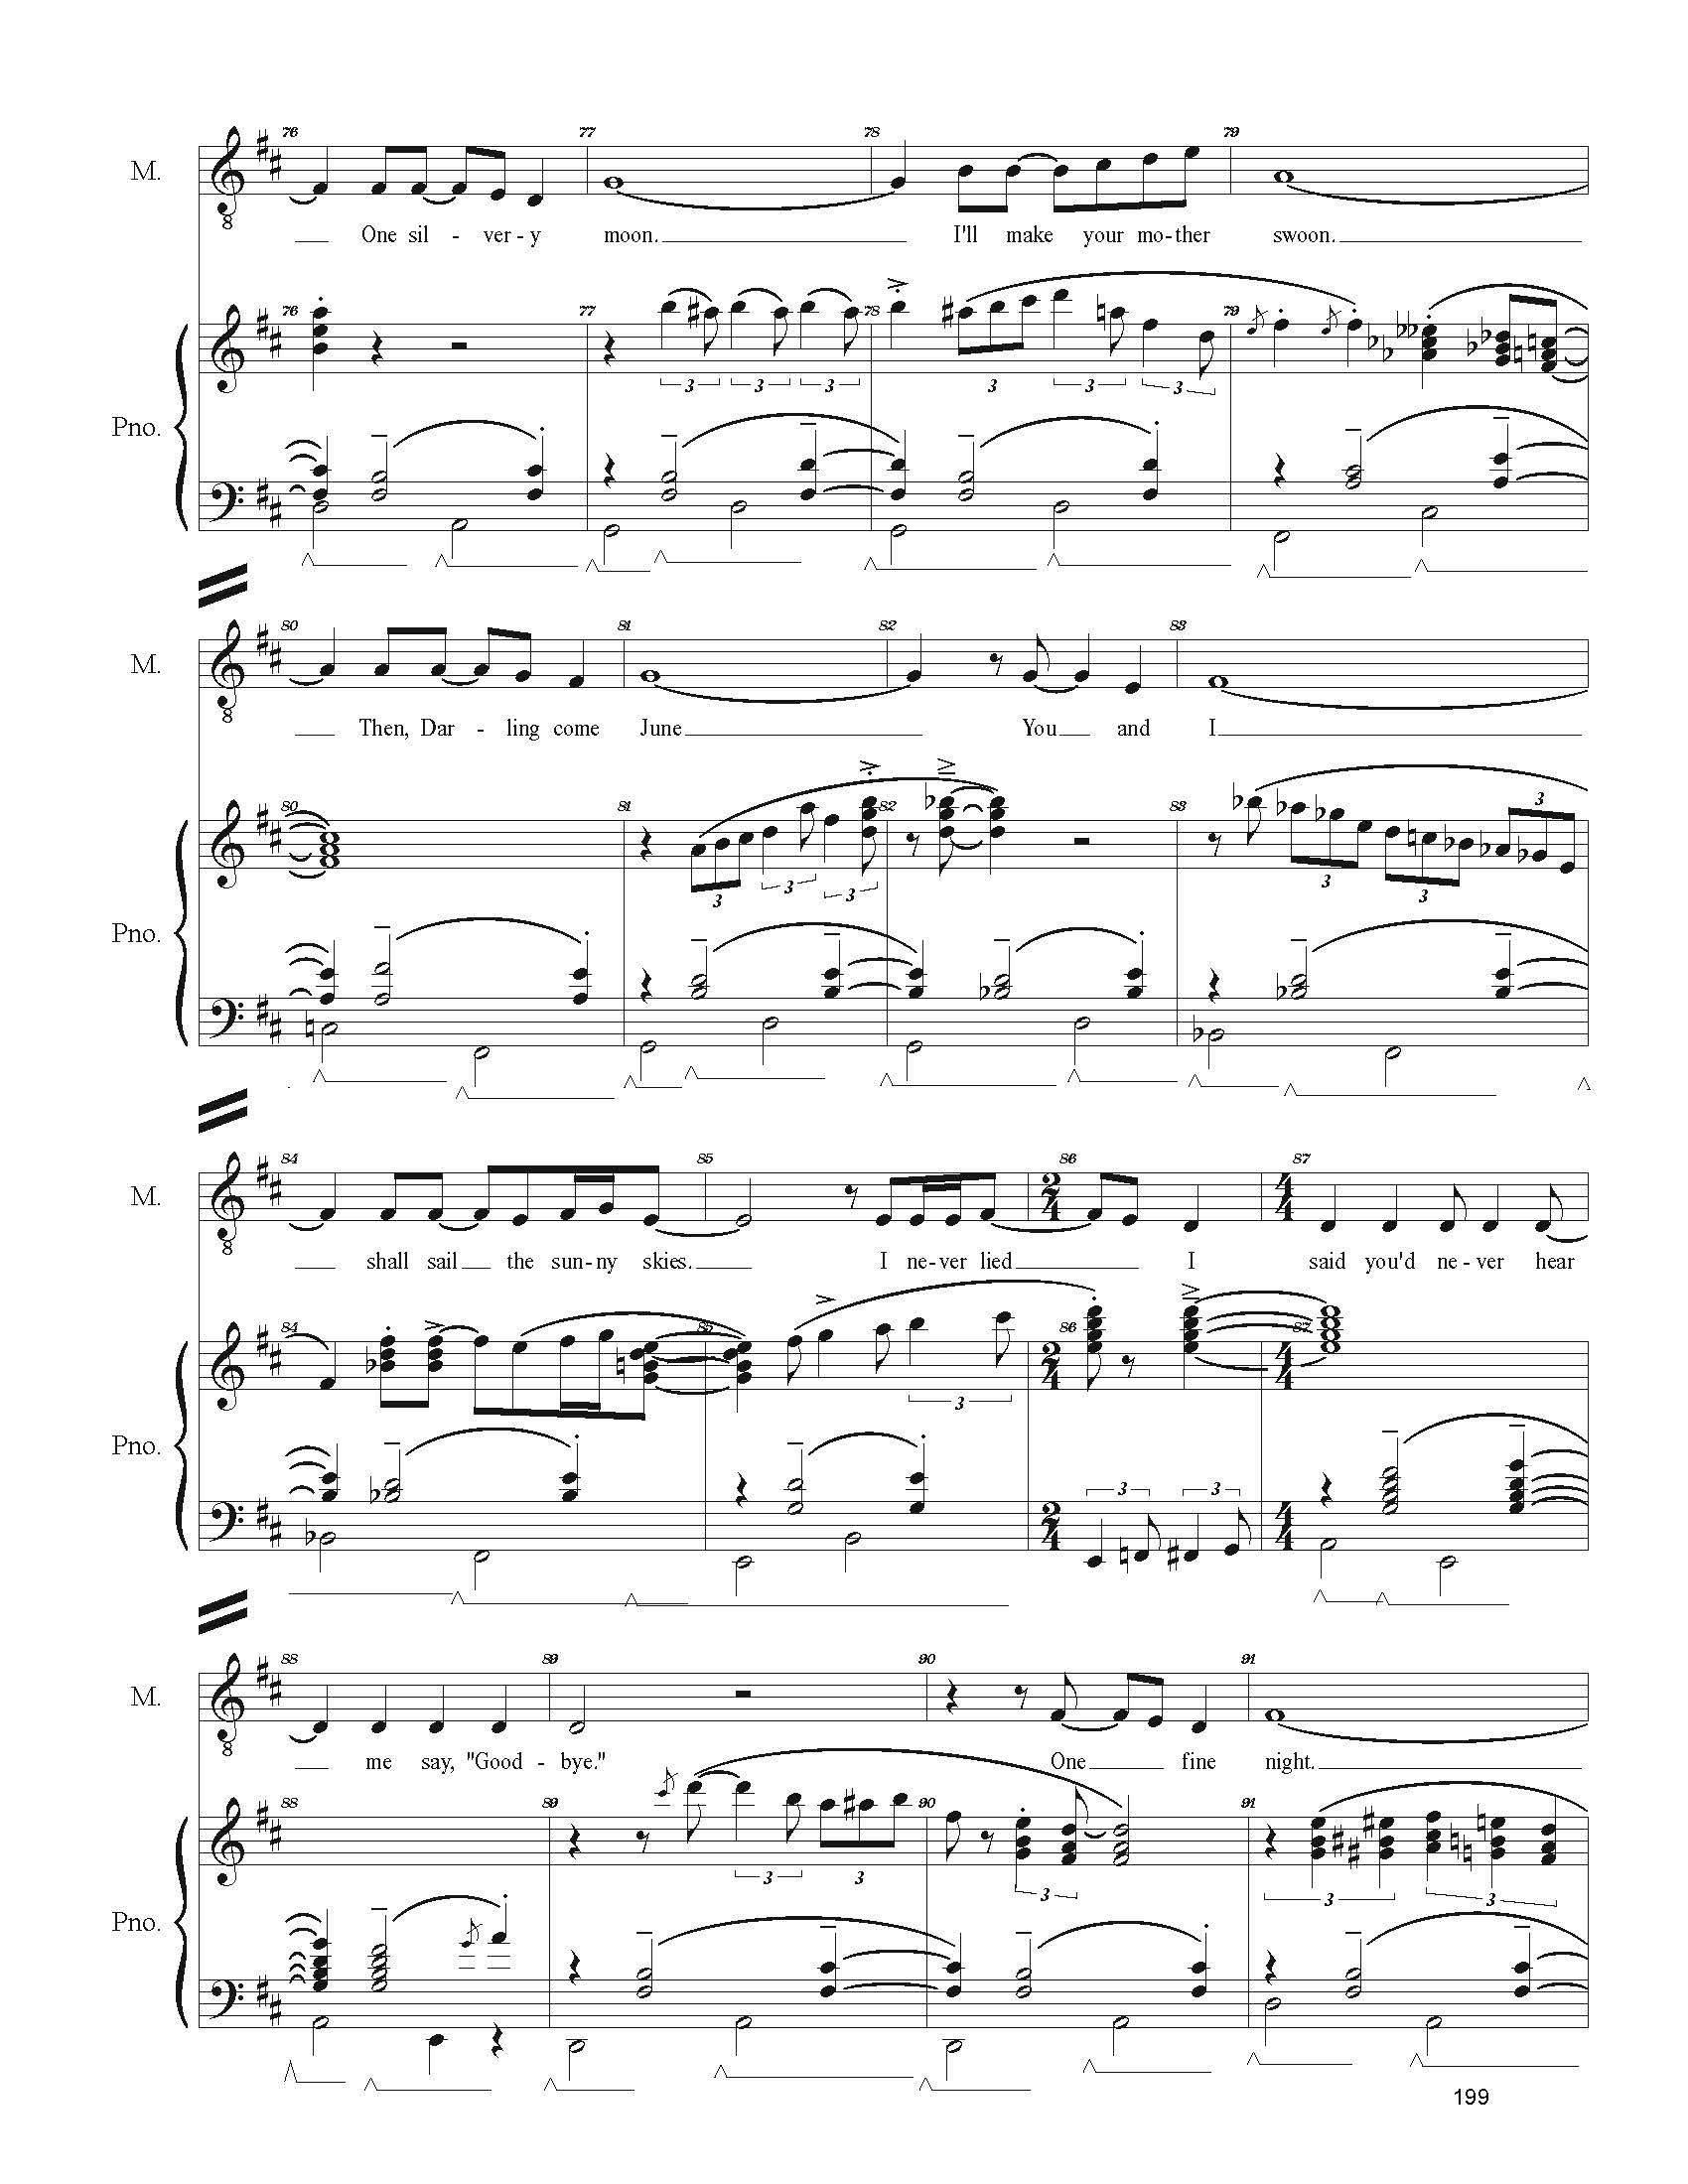 FULL PIANO VOCAL SCORE DRAFT 1 - Score_Page_199.jpg